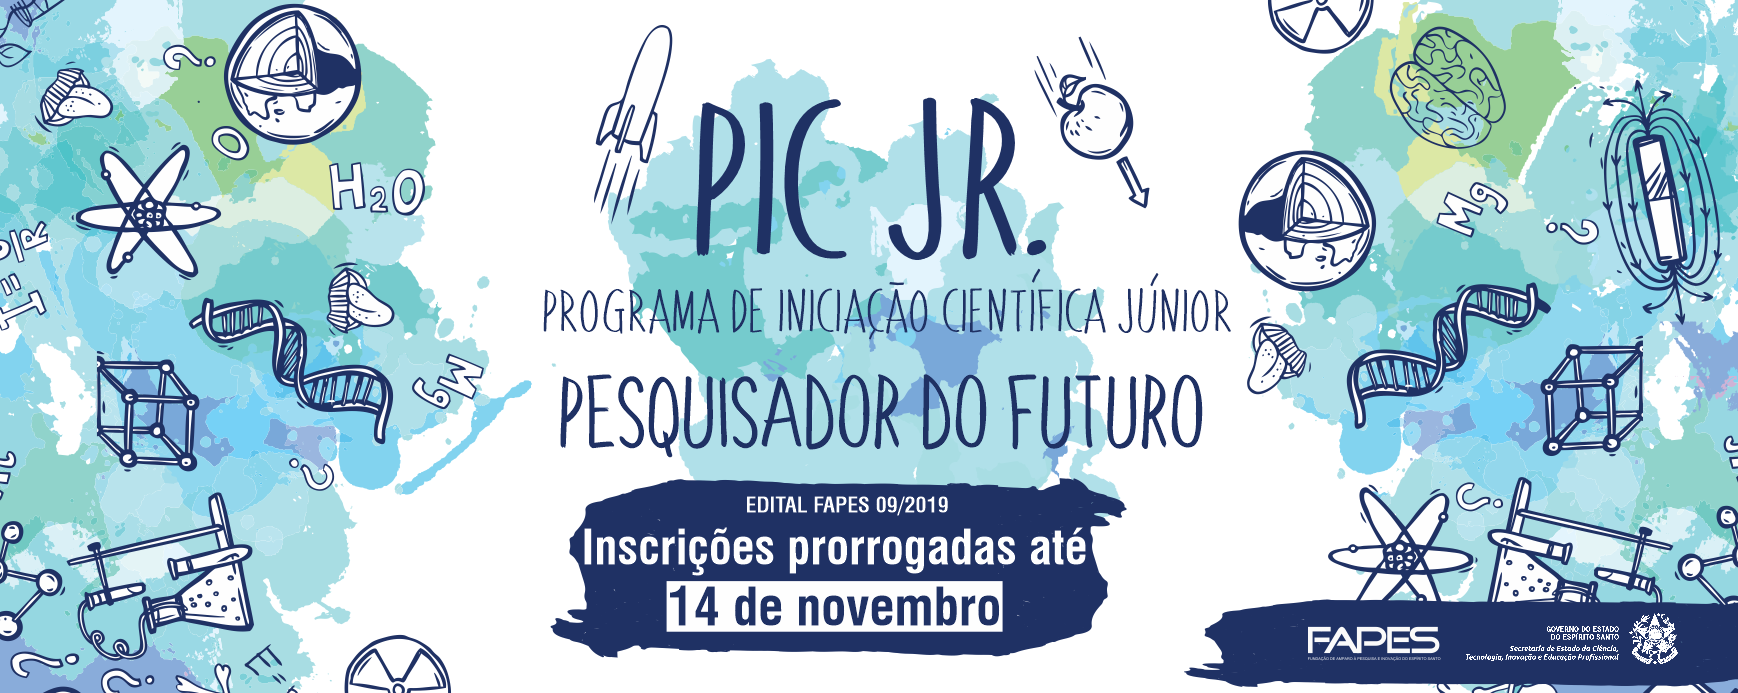 banner-pic-junior-2019-prorrogacao